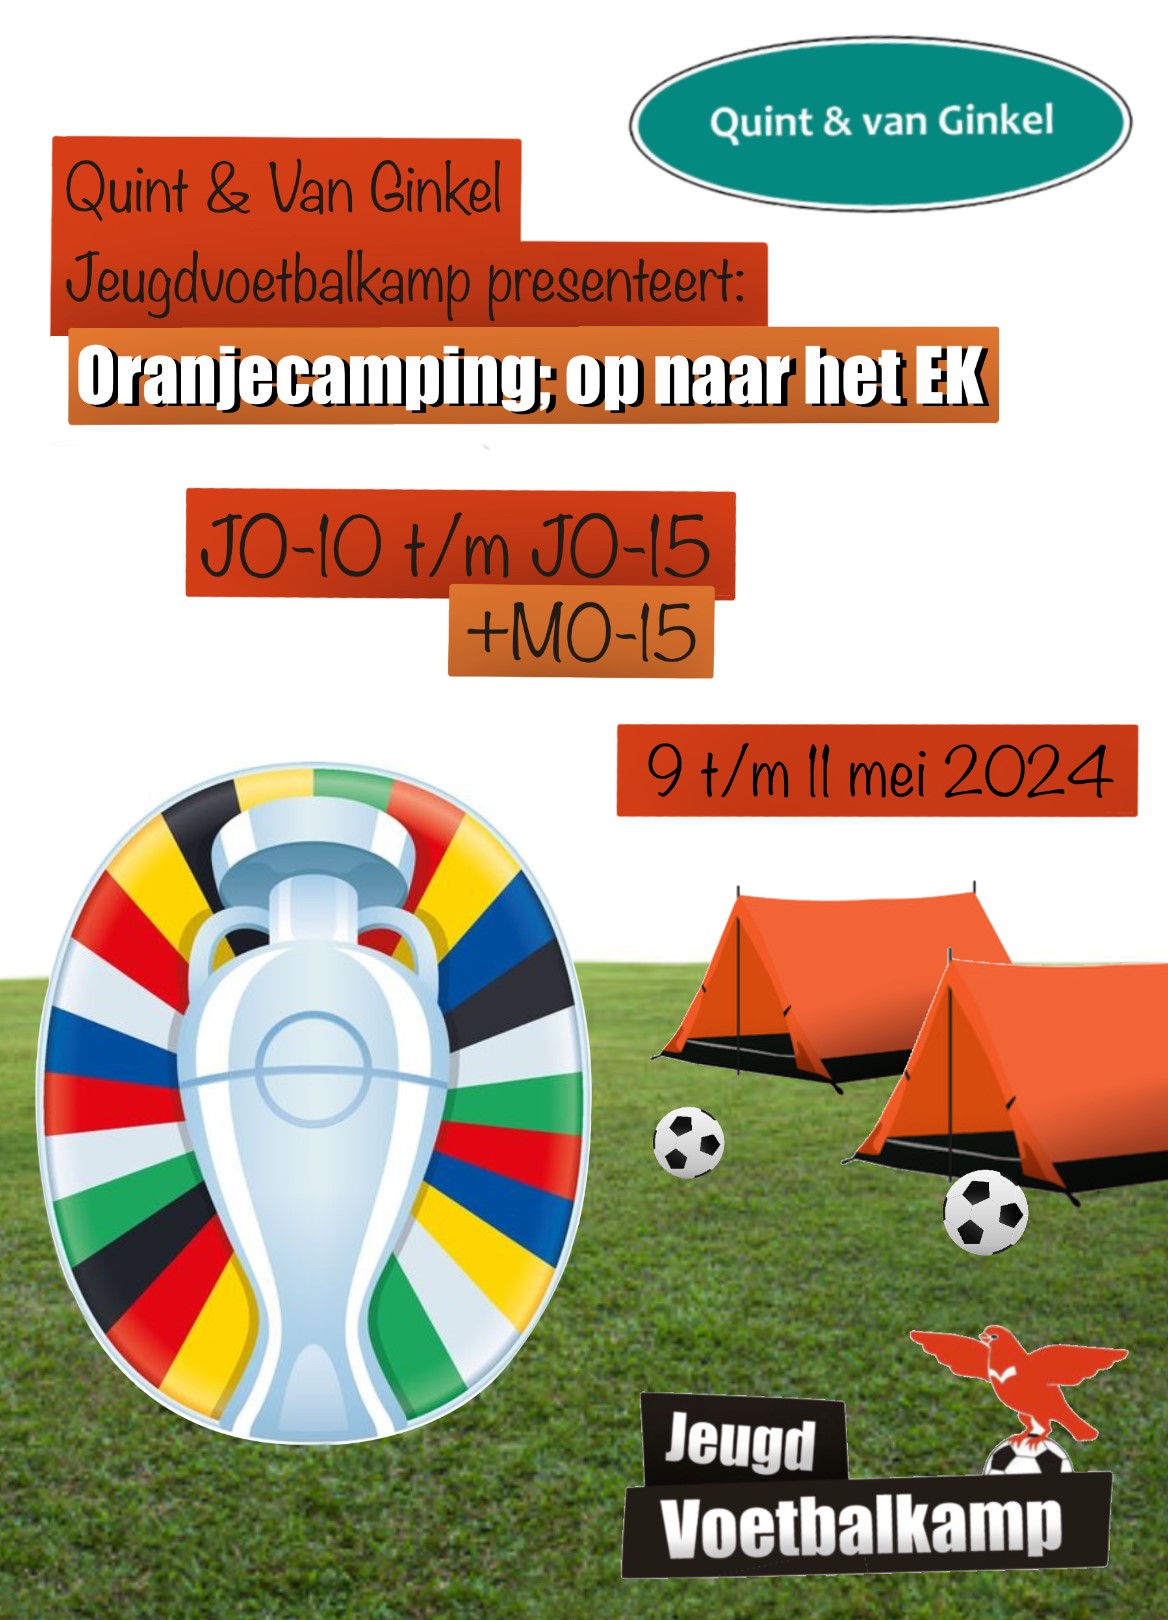 Info Quint & van Ginkel jeugdvoetbalkamp 2024.